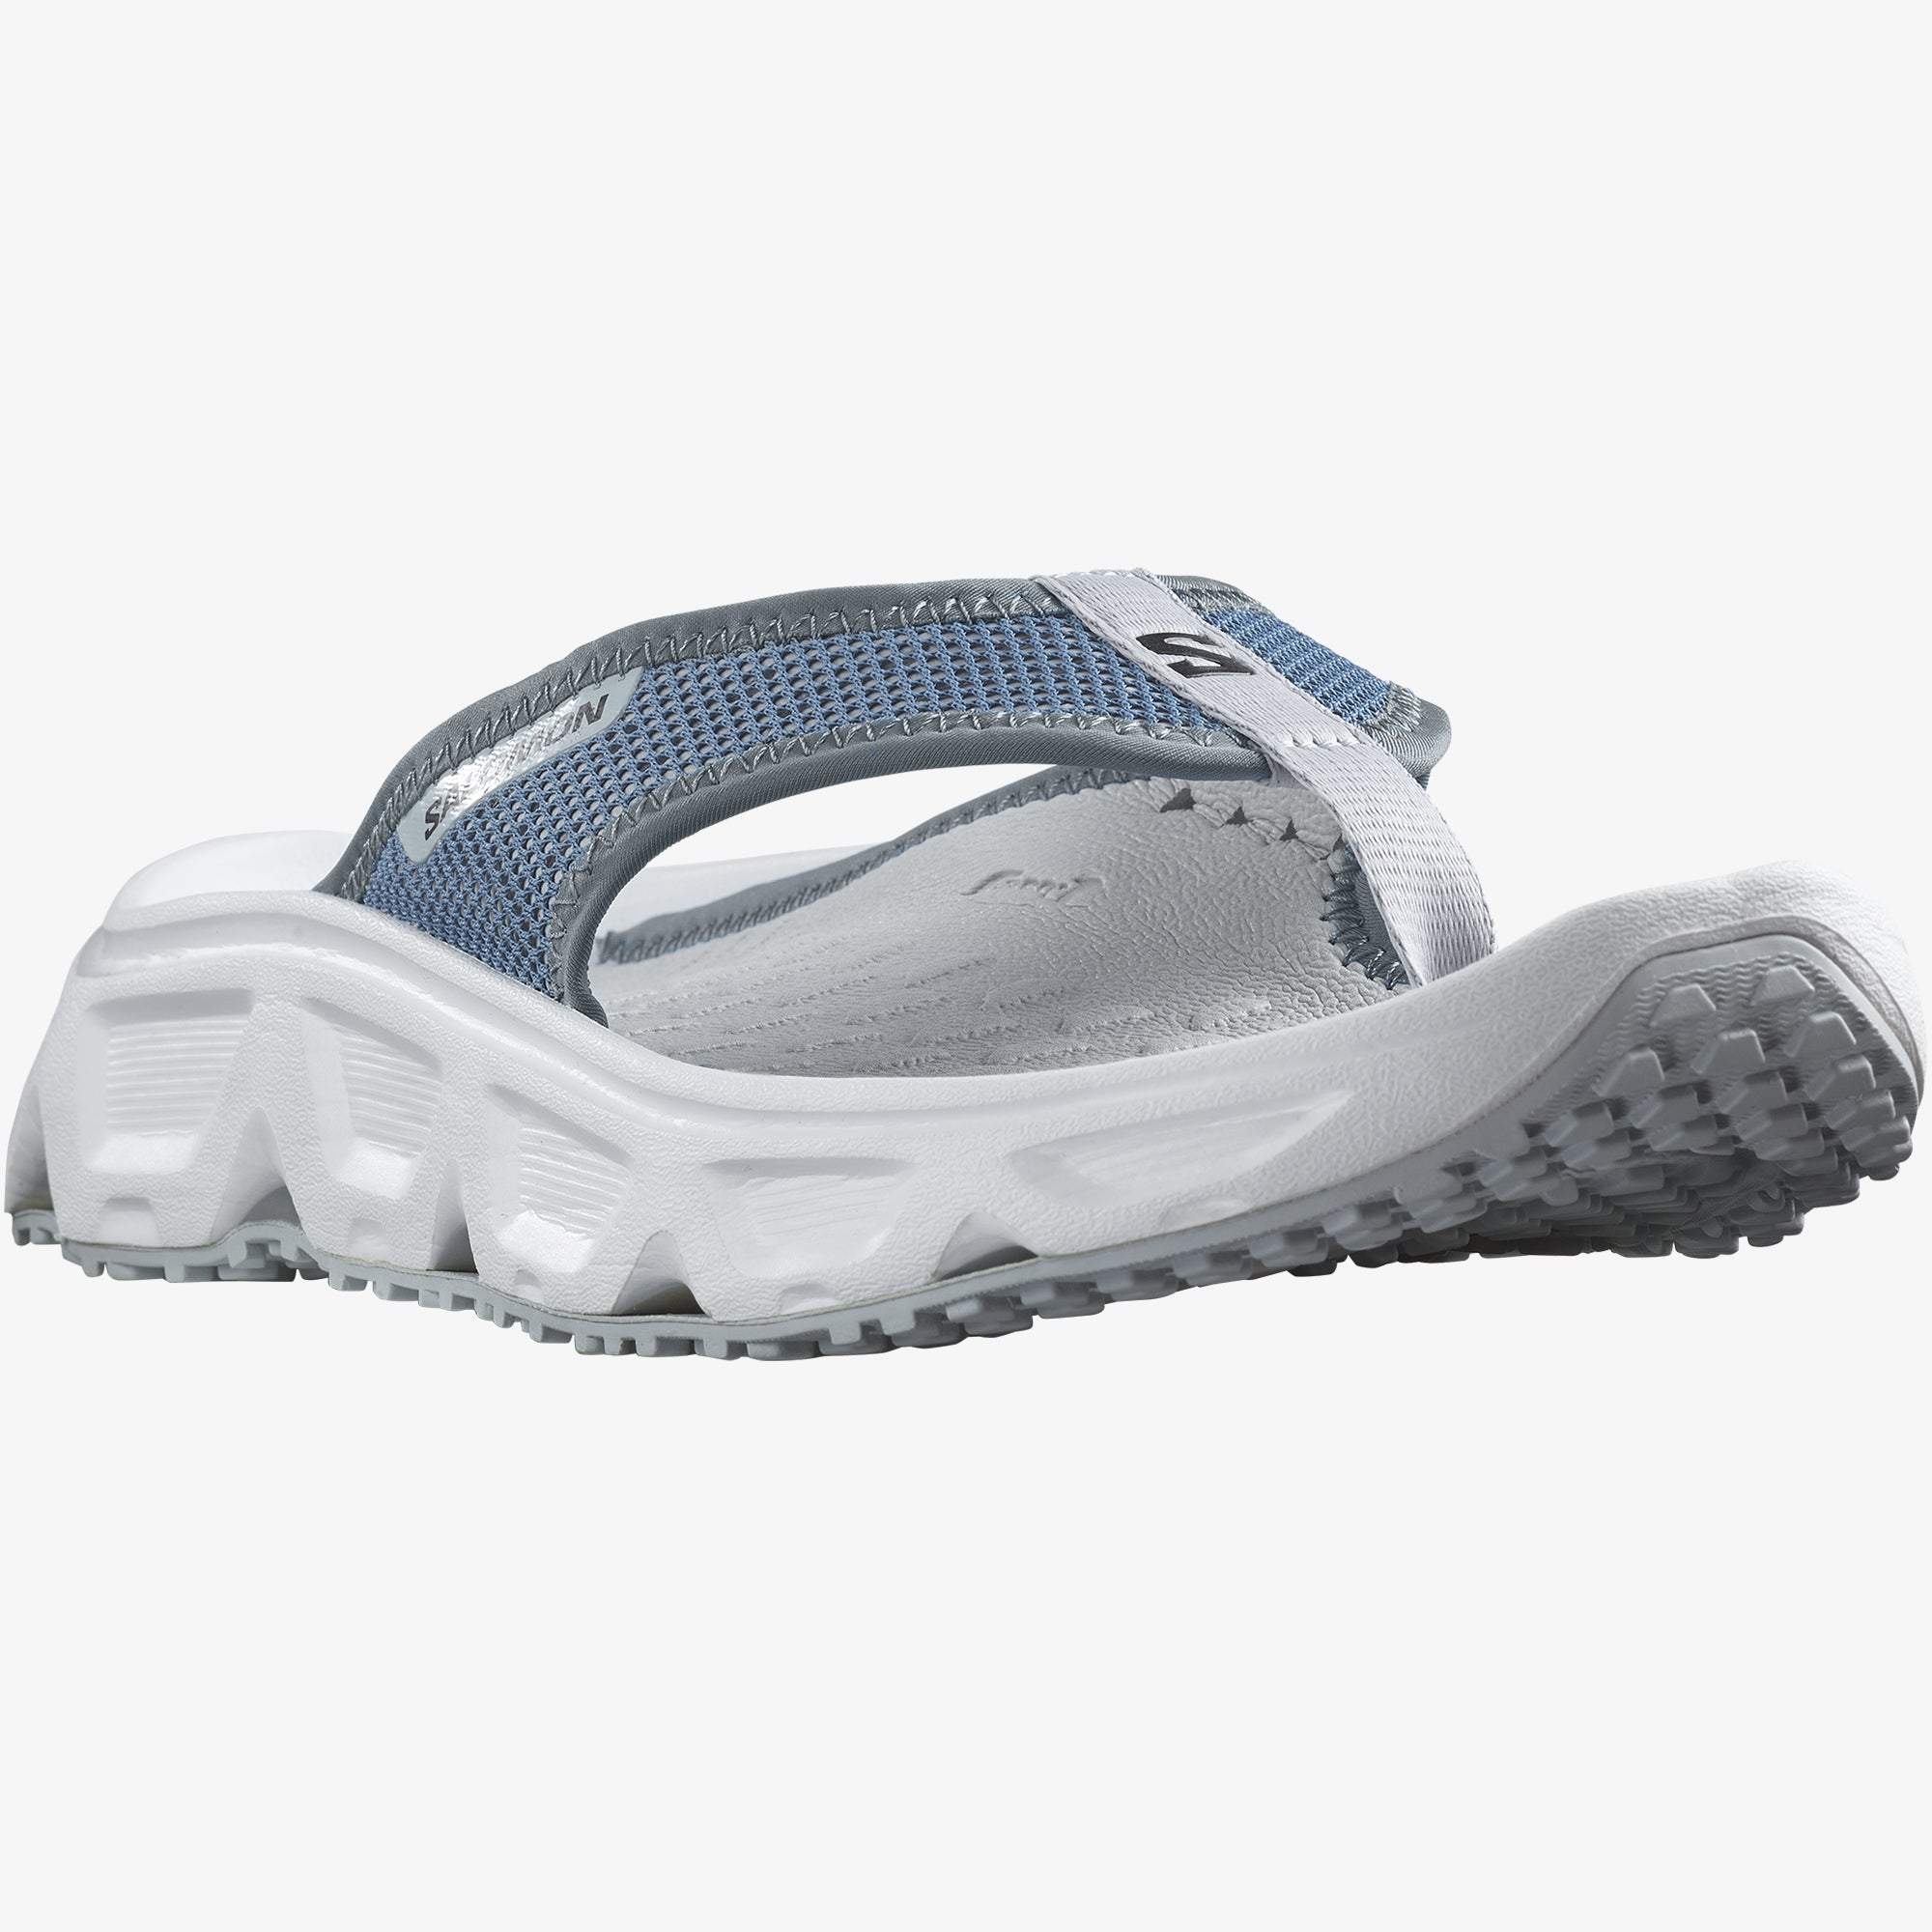 Buy Salomon Men's Water Shoes Beach Sandals REELAX MOC (Relax Mock